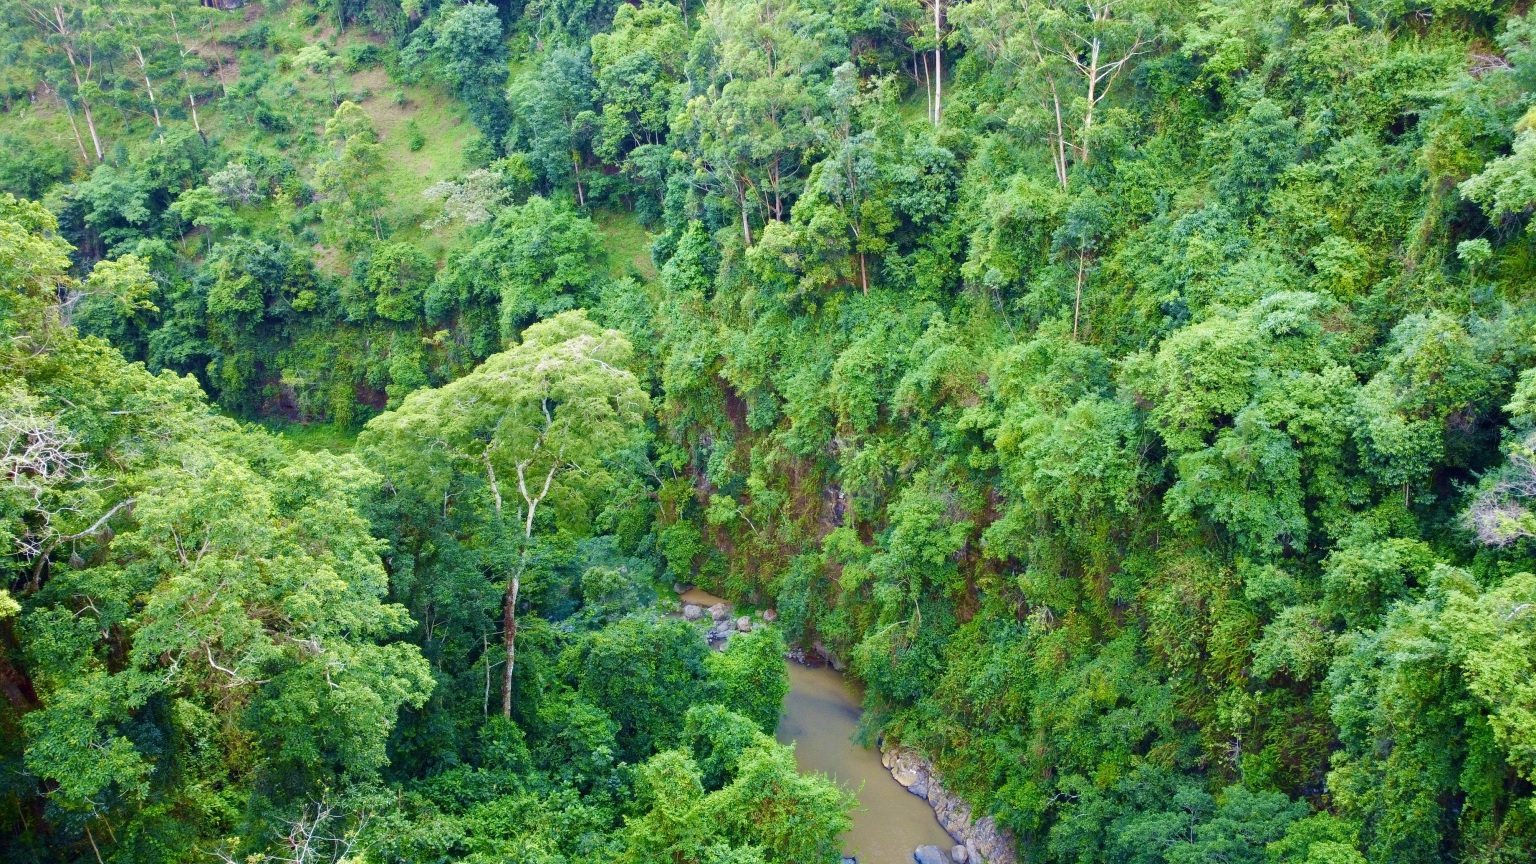 The canyon of Weru Weru